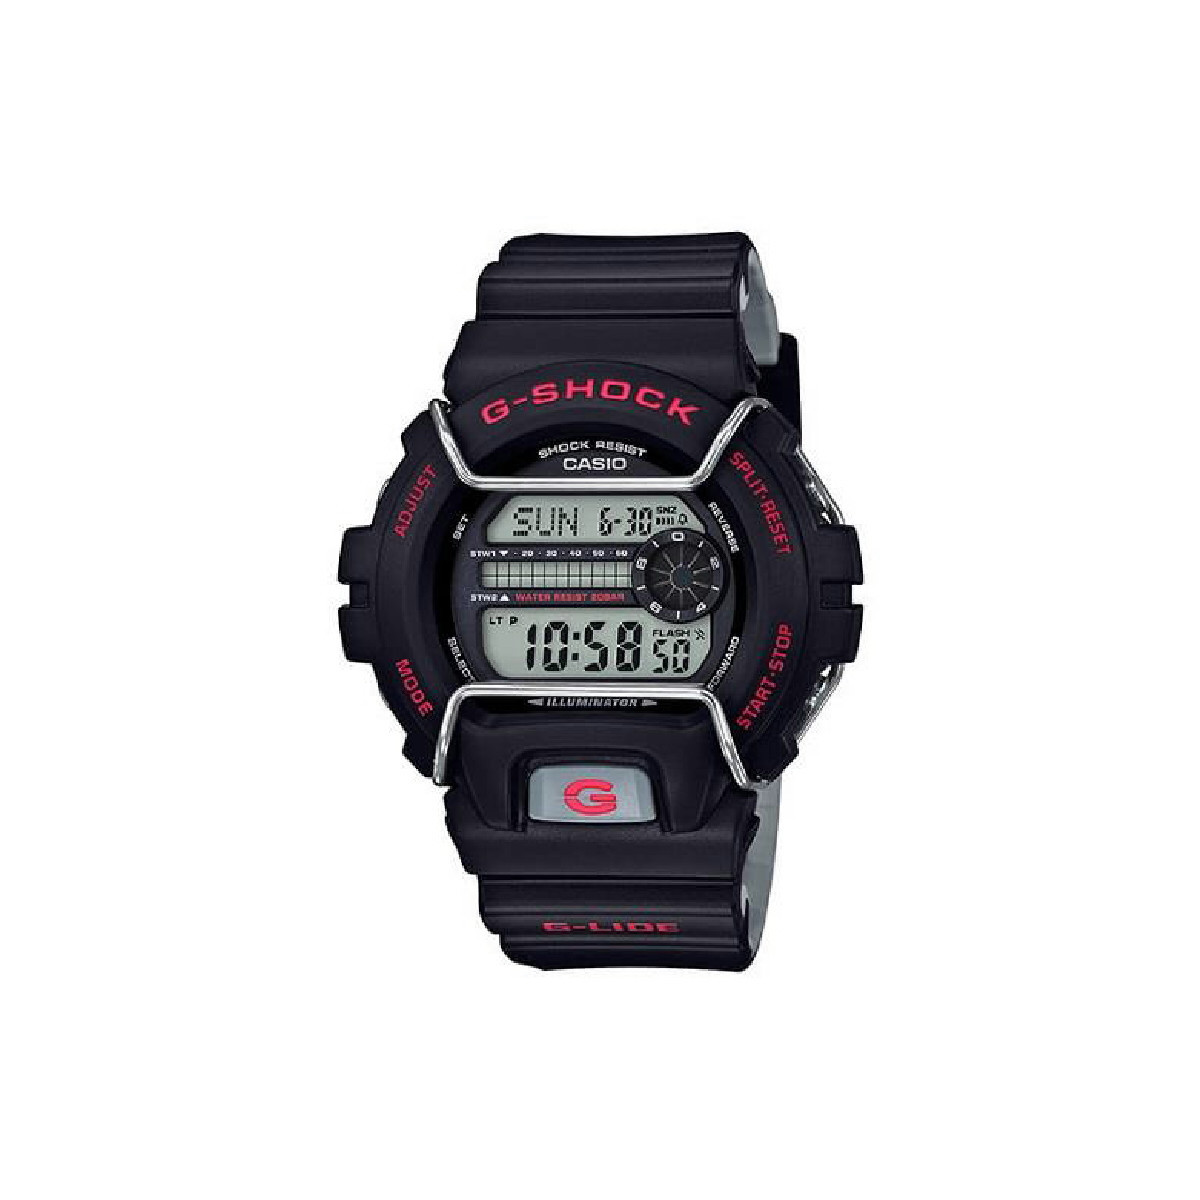 Reloj Casio G-SHOCK, modelo GLS-6900-1ER